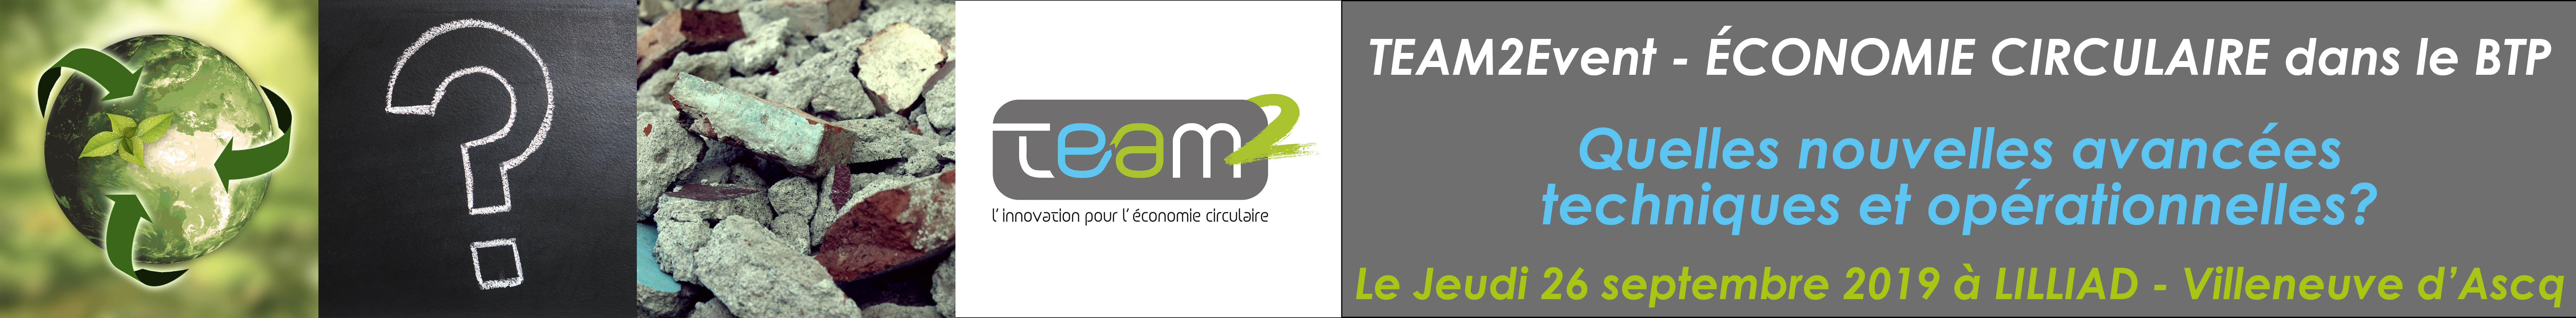 event_team2_economie-circulaire-BTP